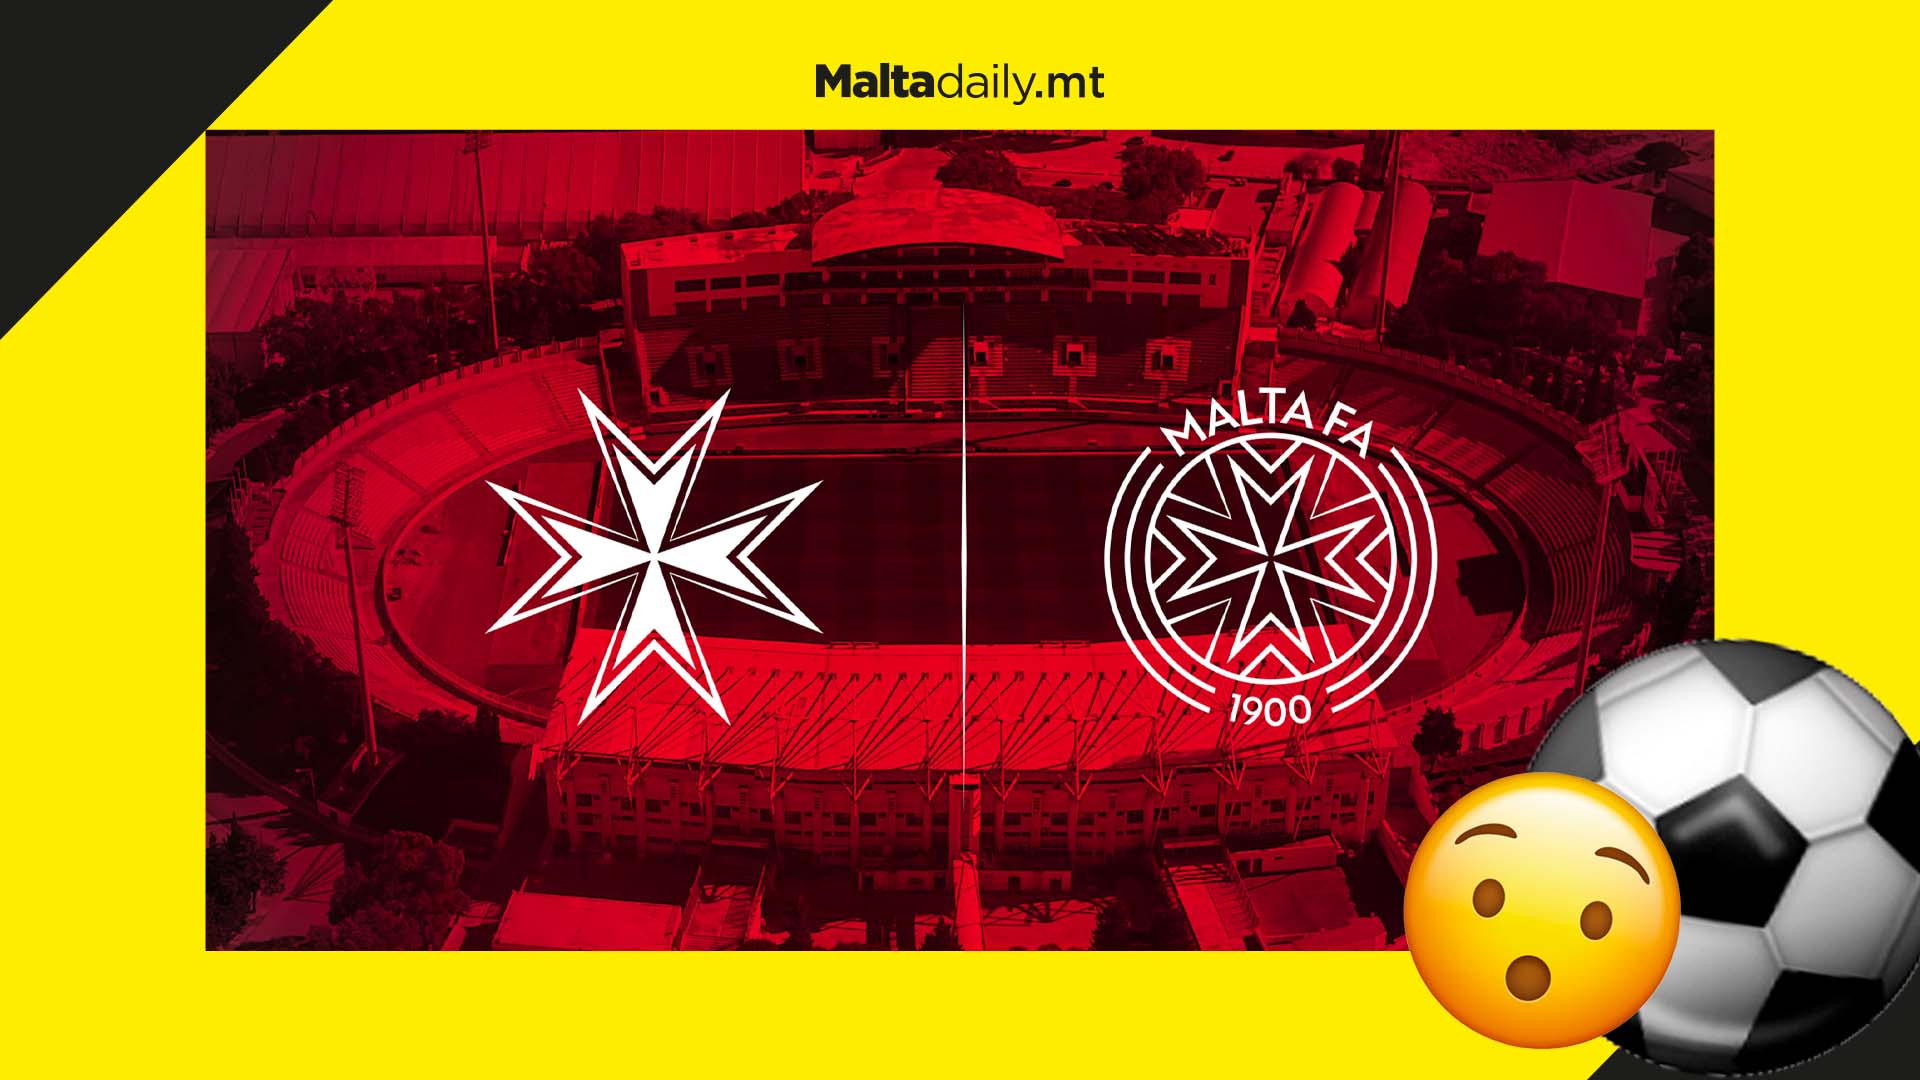 Check out Malta Football Association’s fresh new logos